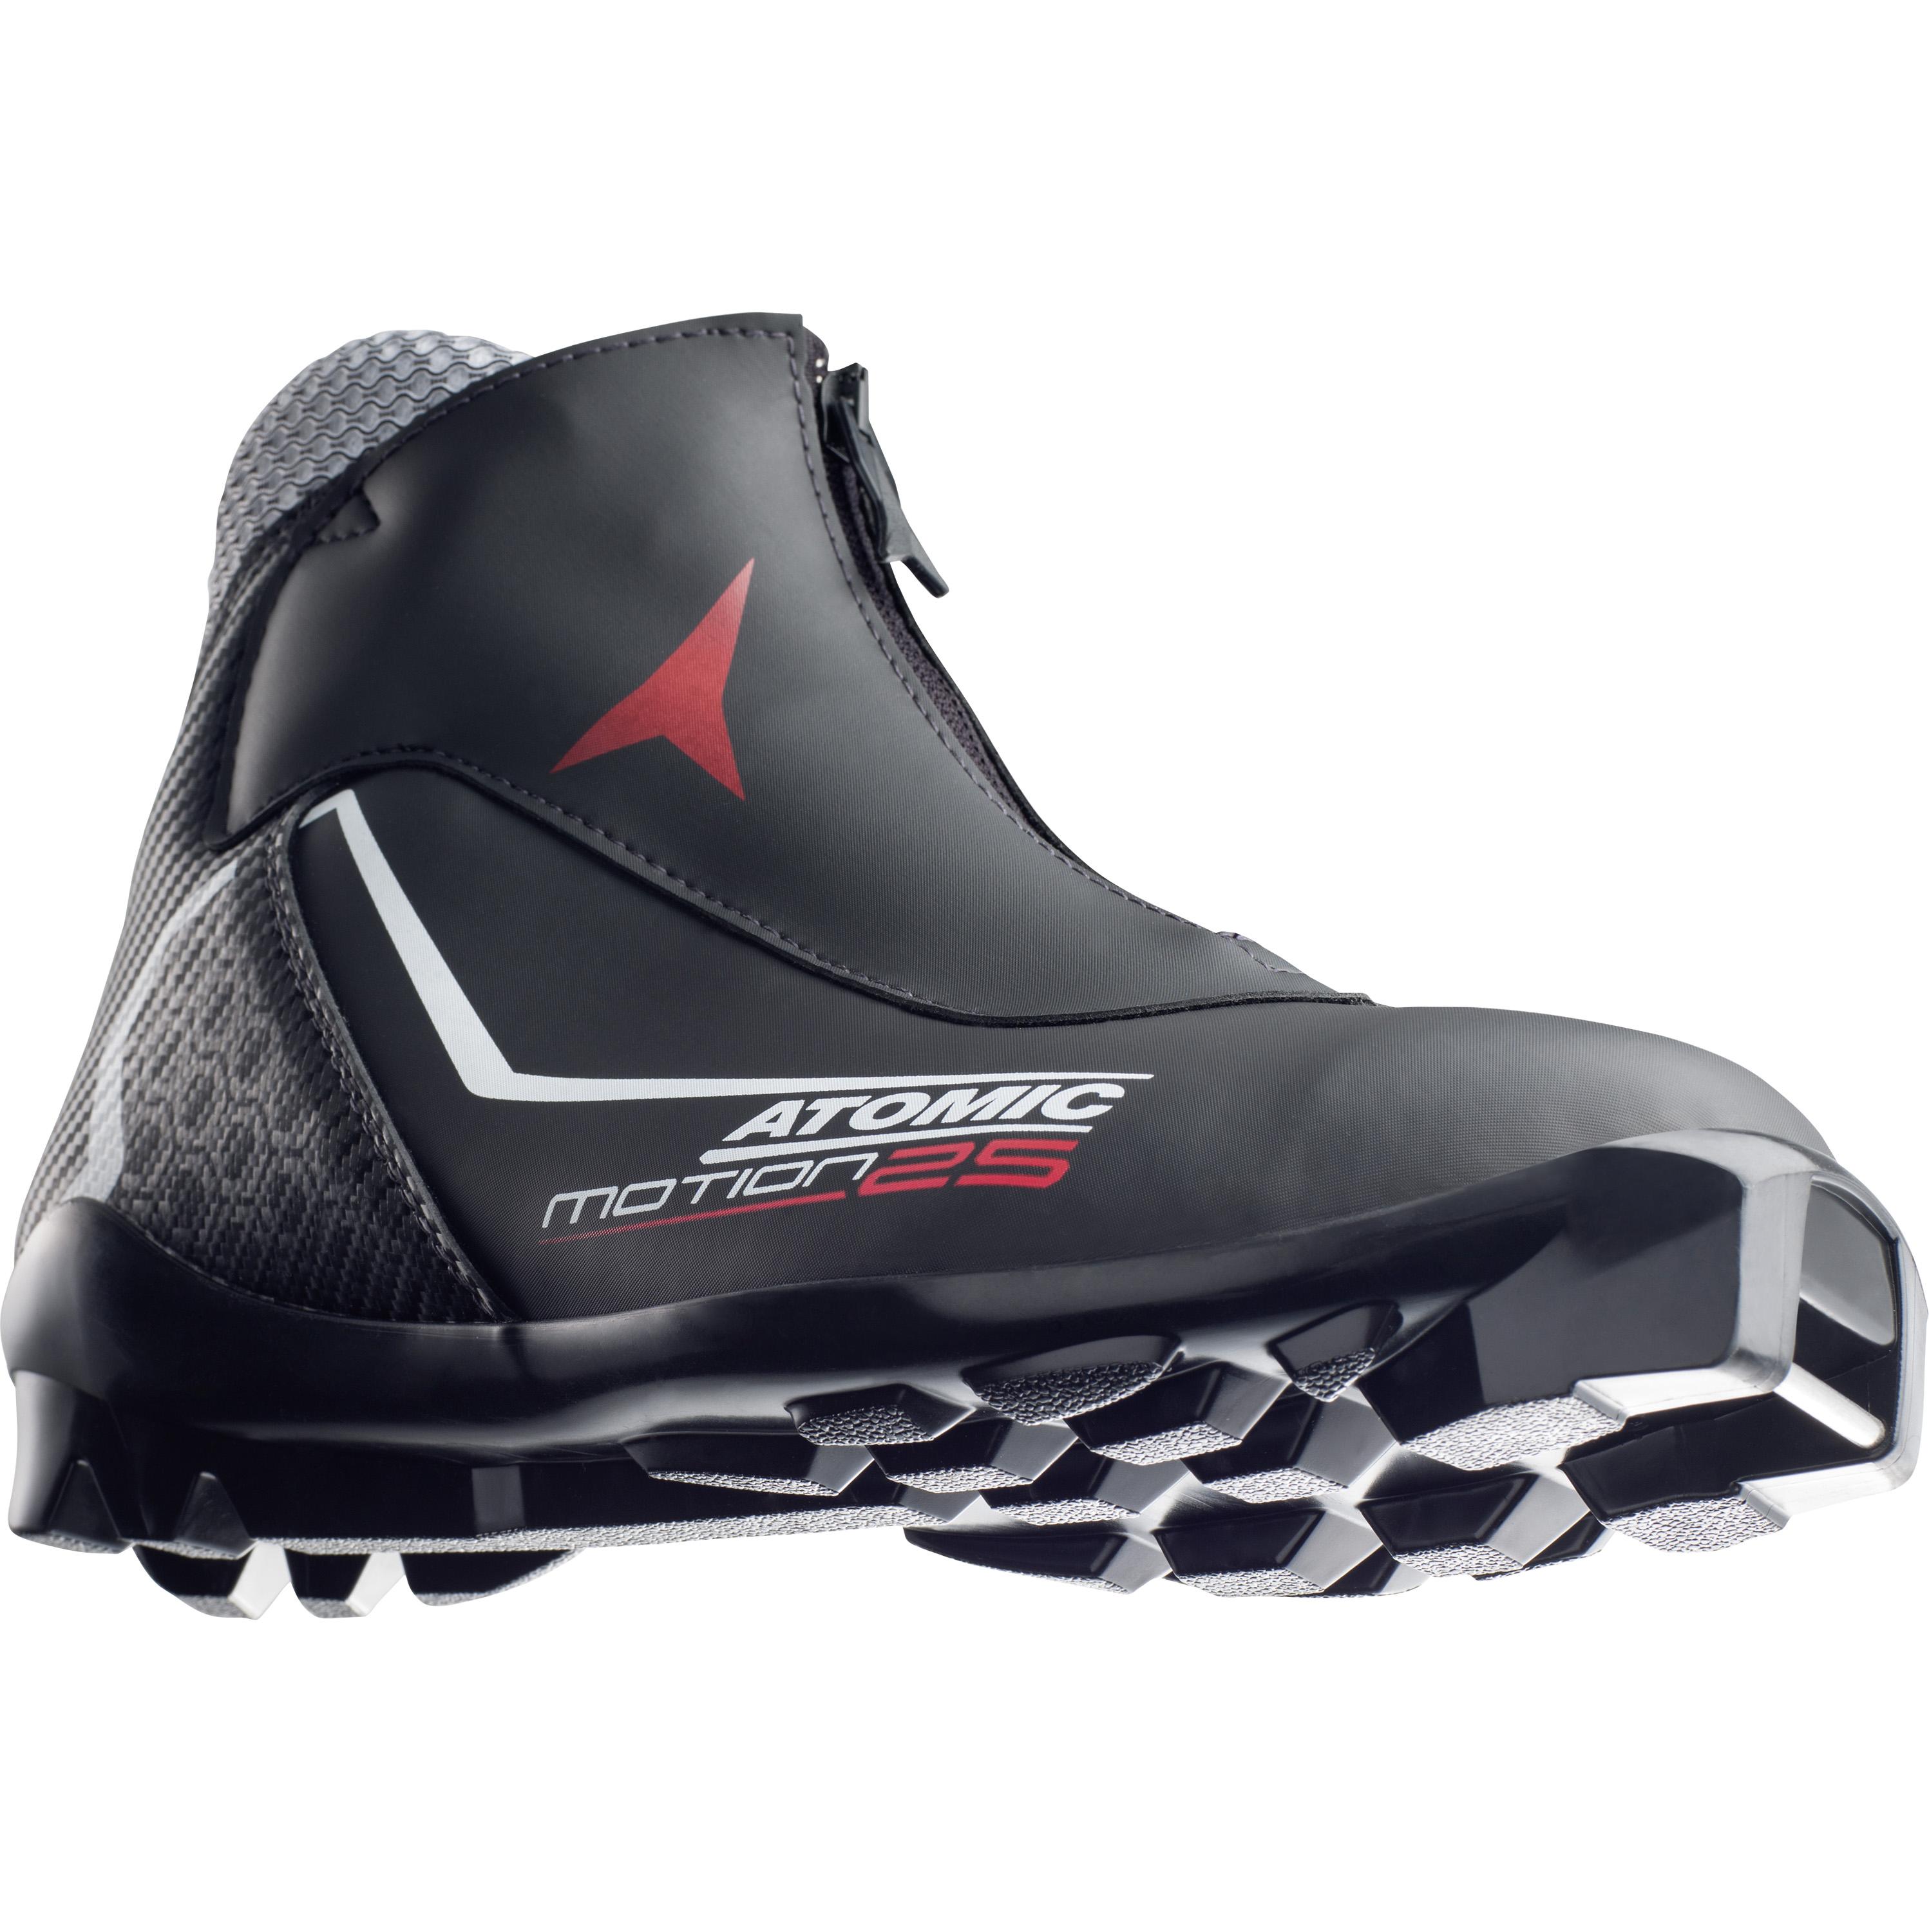 Atomic Motion 25 SNS nordic ski boots